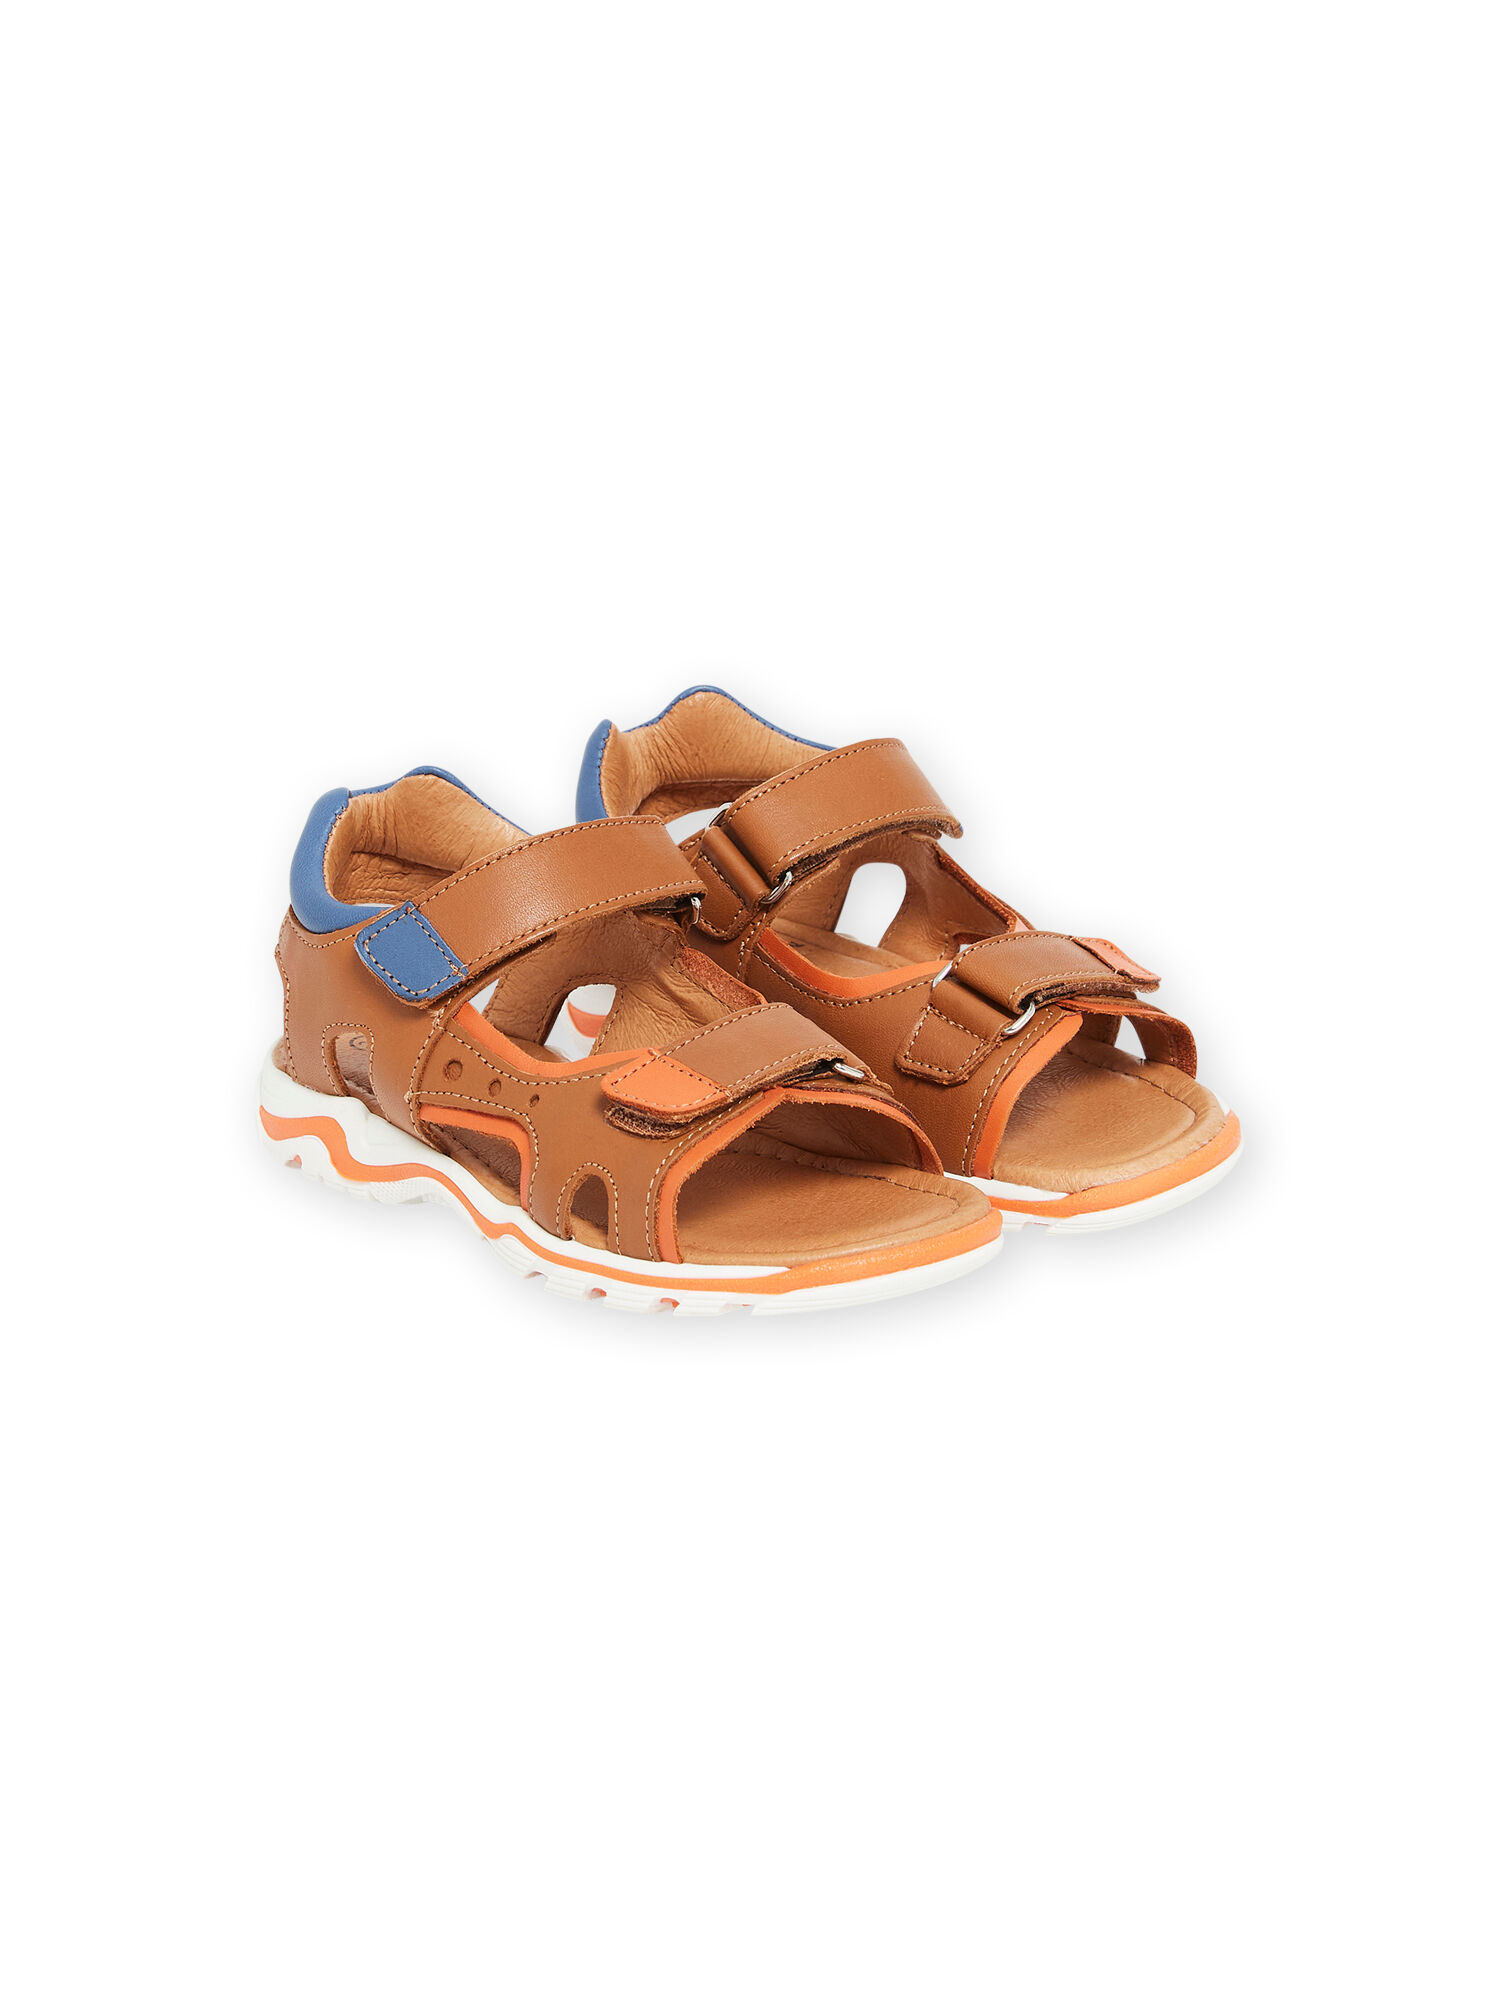 Sandals Children Kids Shoes Baby Boys Girls | Leather Sandals Boys Girls -  Summer - Aliexpress